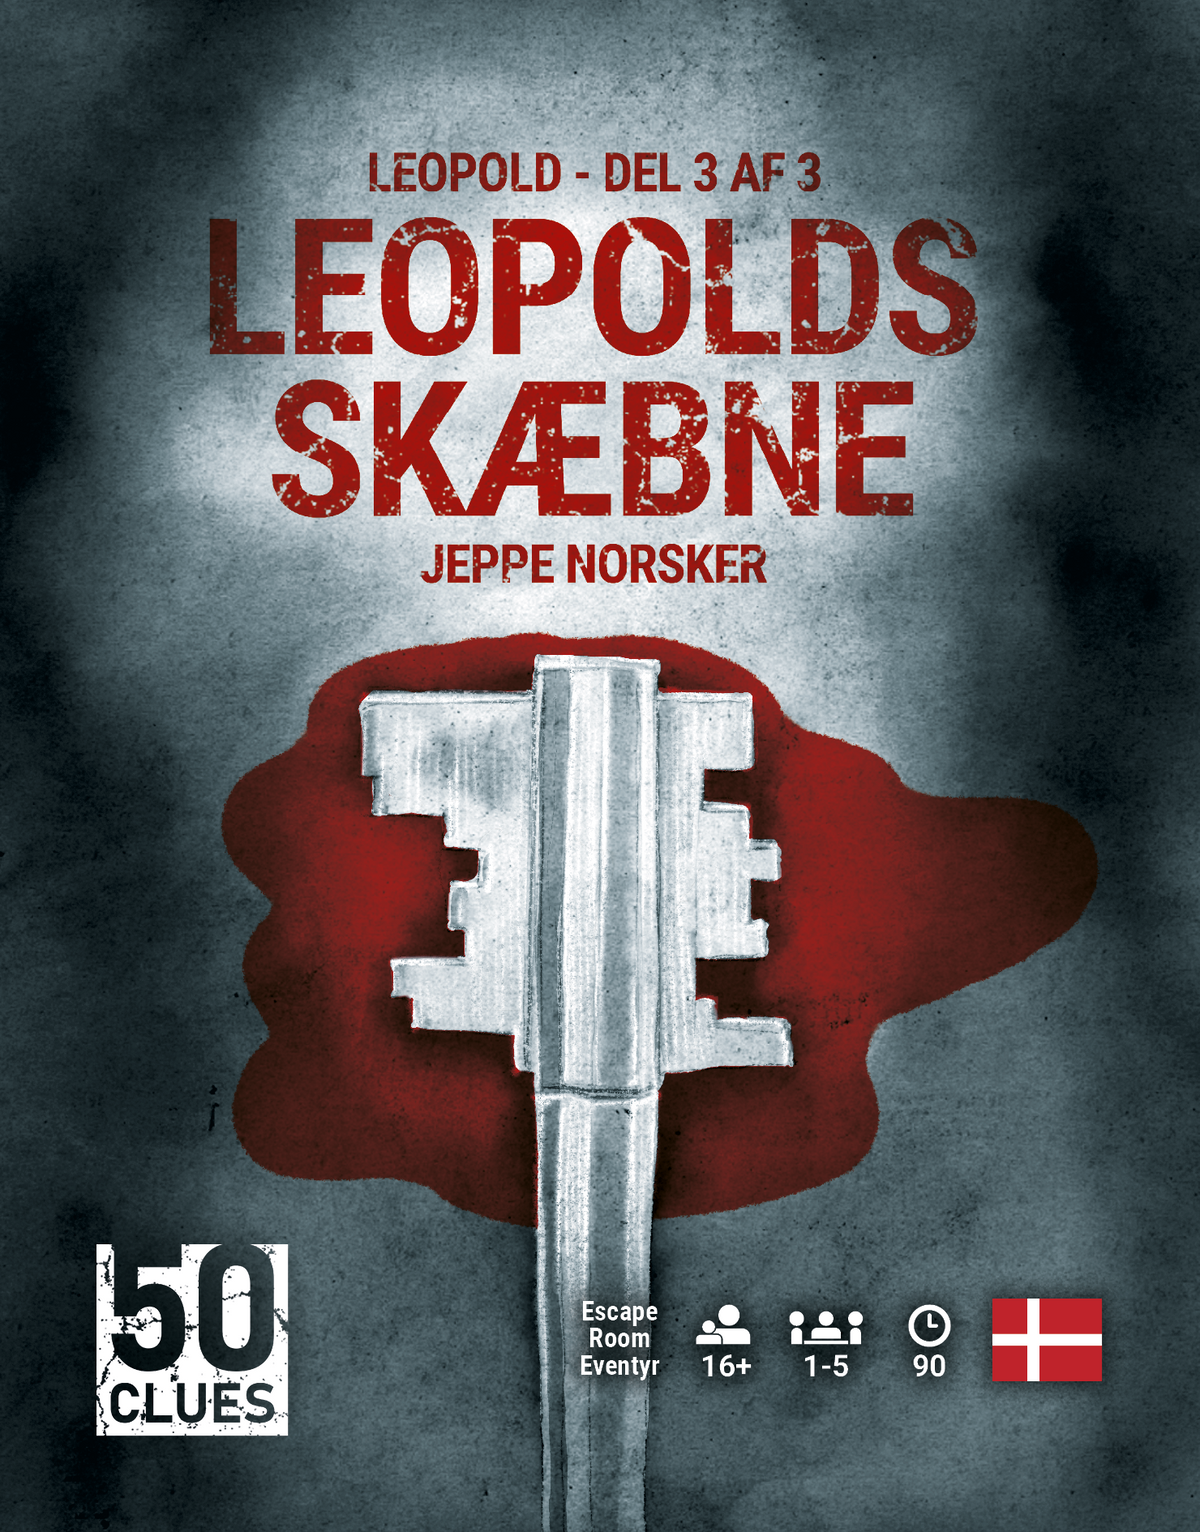 50 Clues: Leopold trilogien (Dansk)